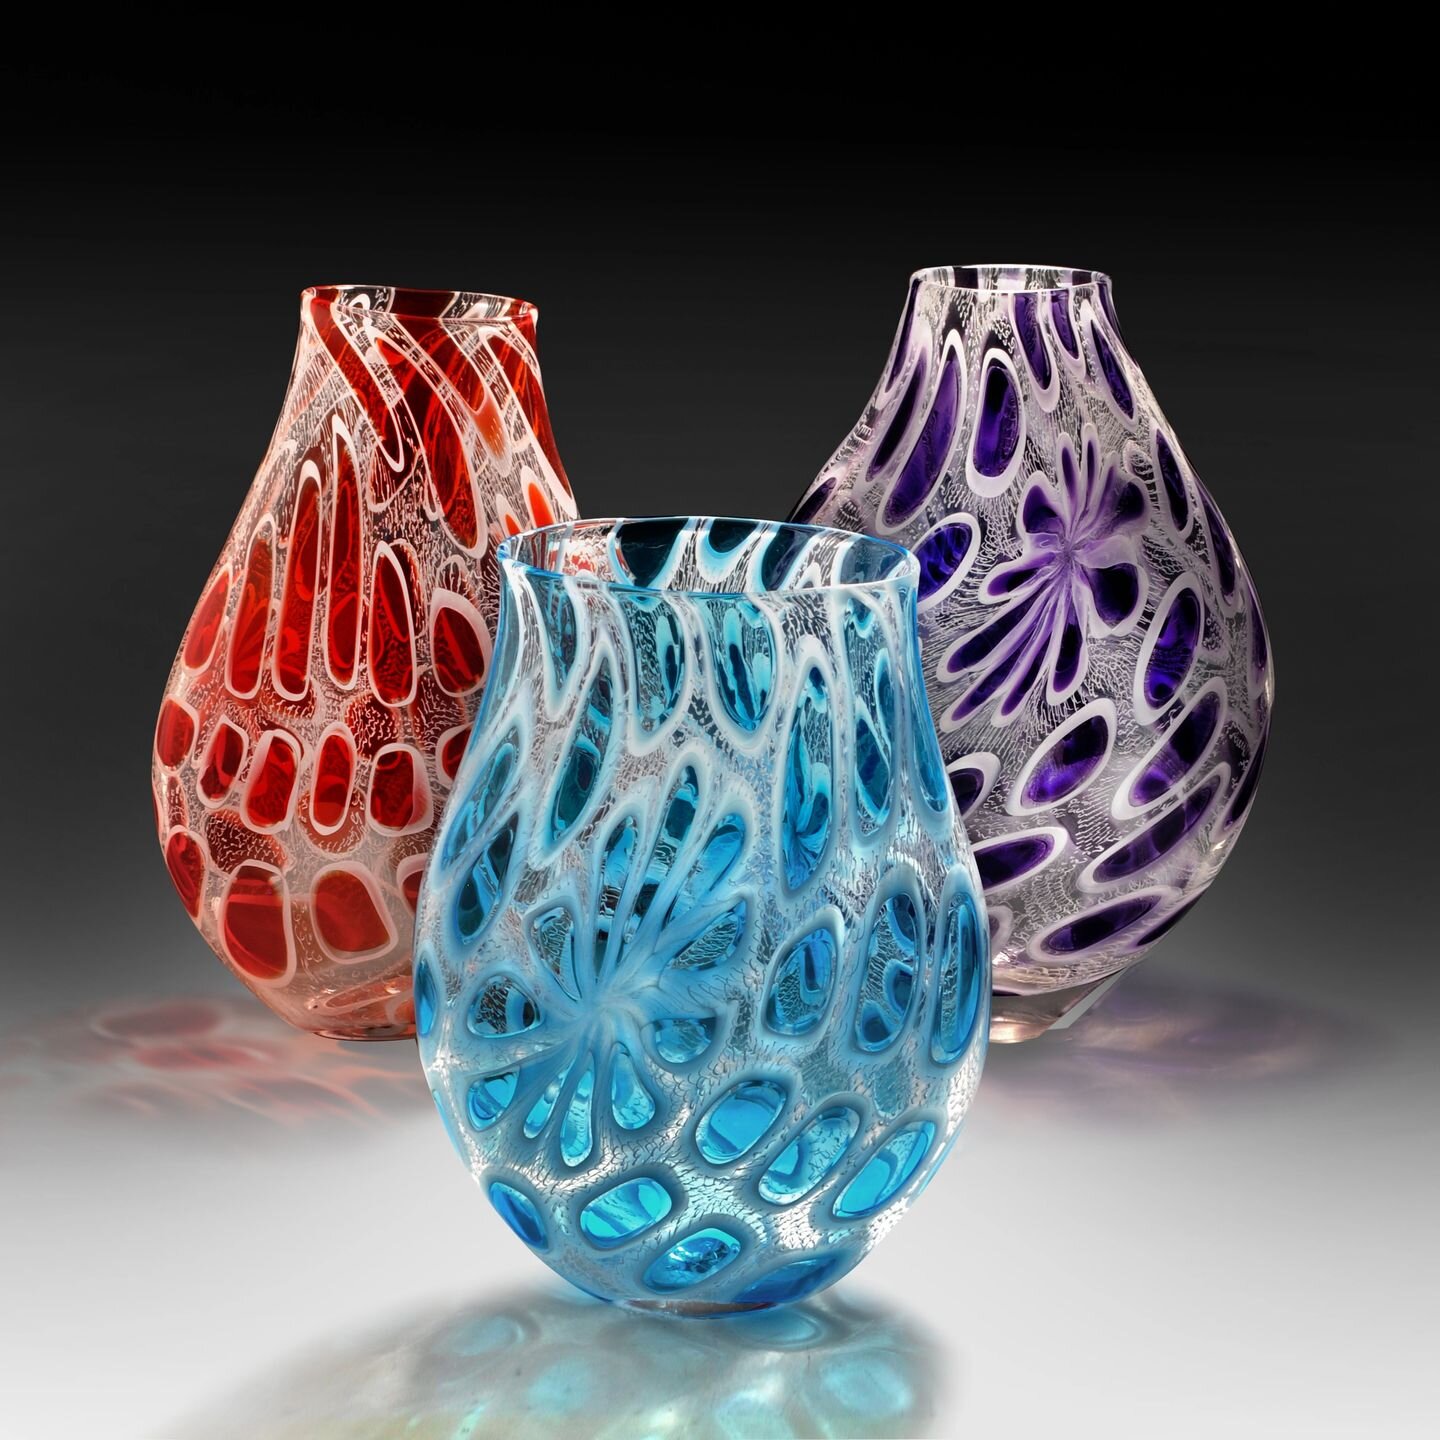 High-end Glass Art and Custom Glass Blown Lighting